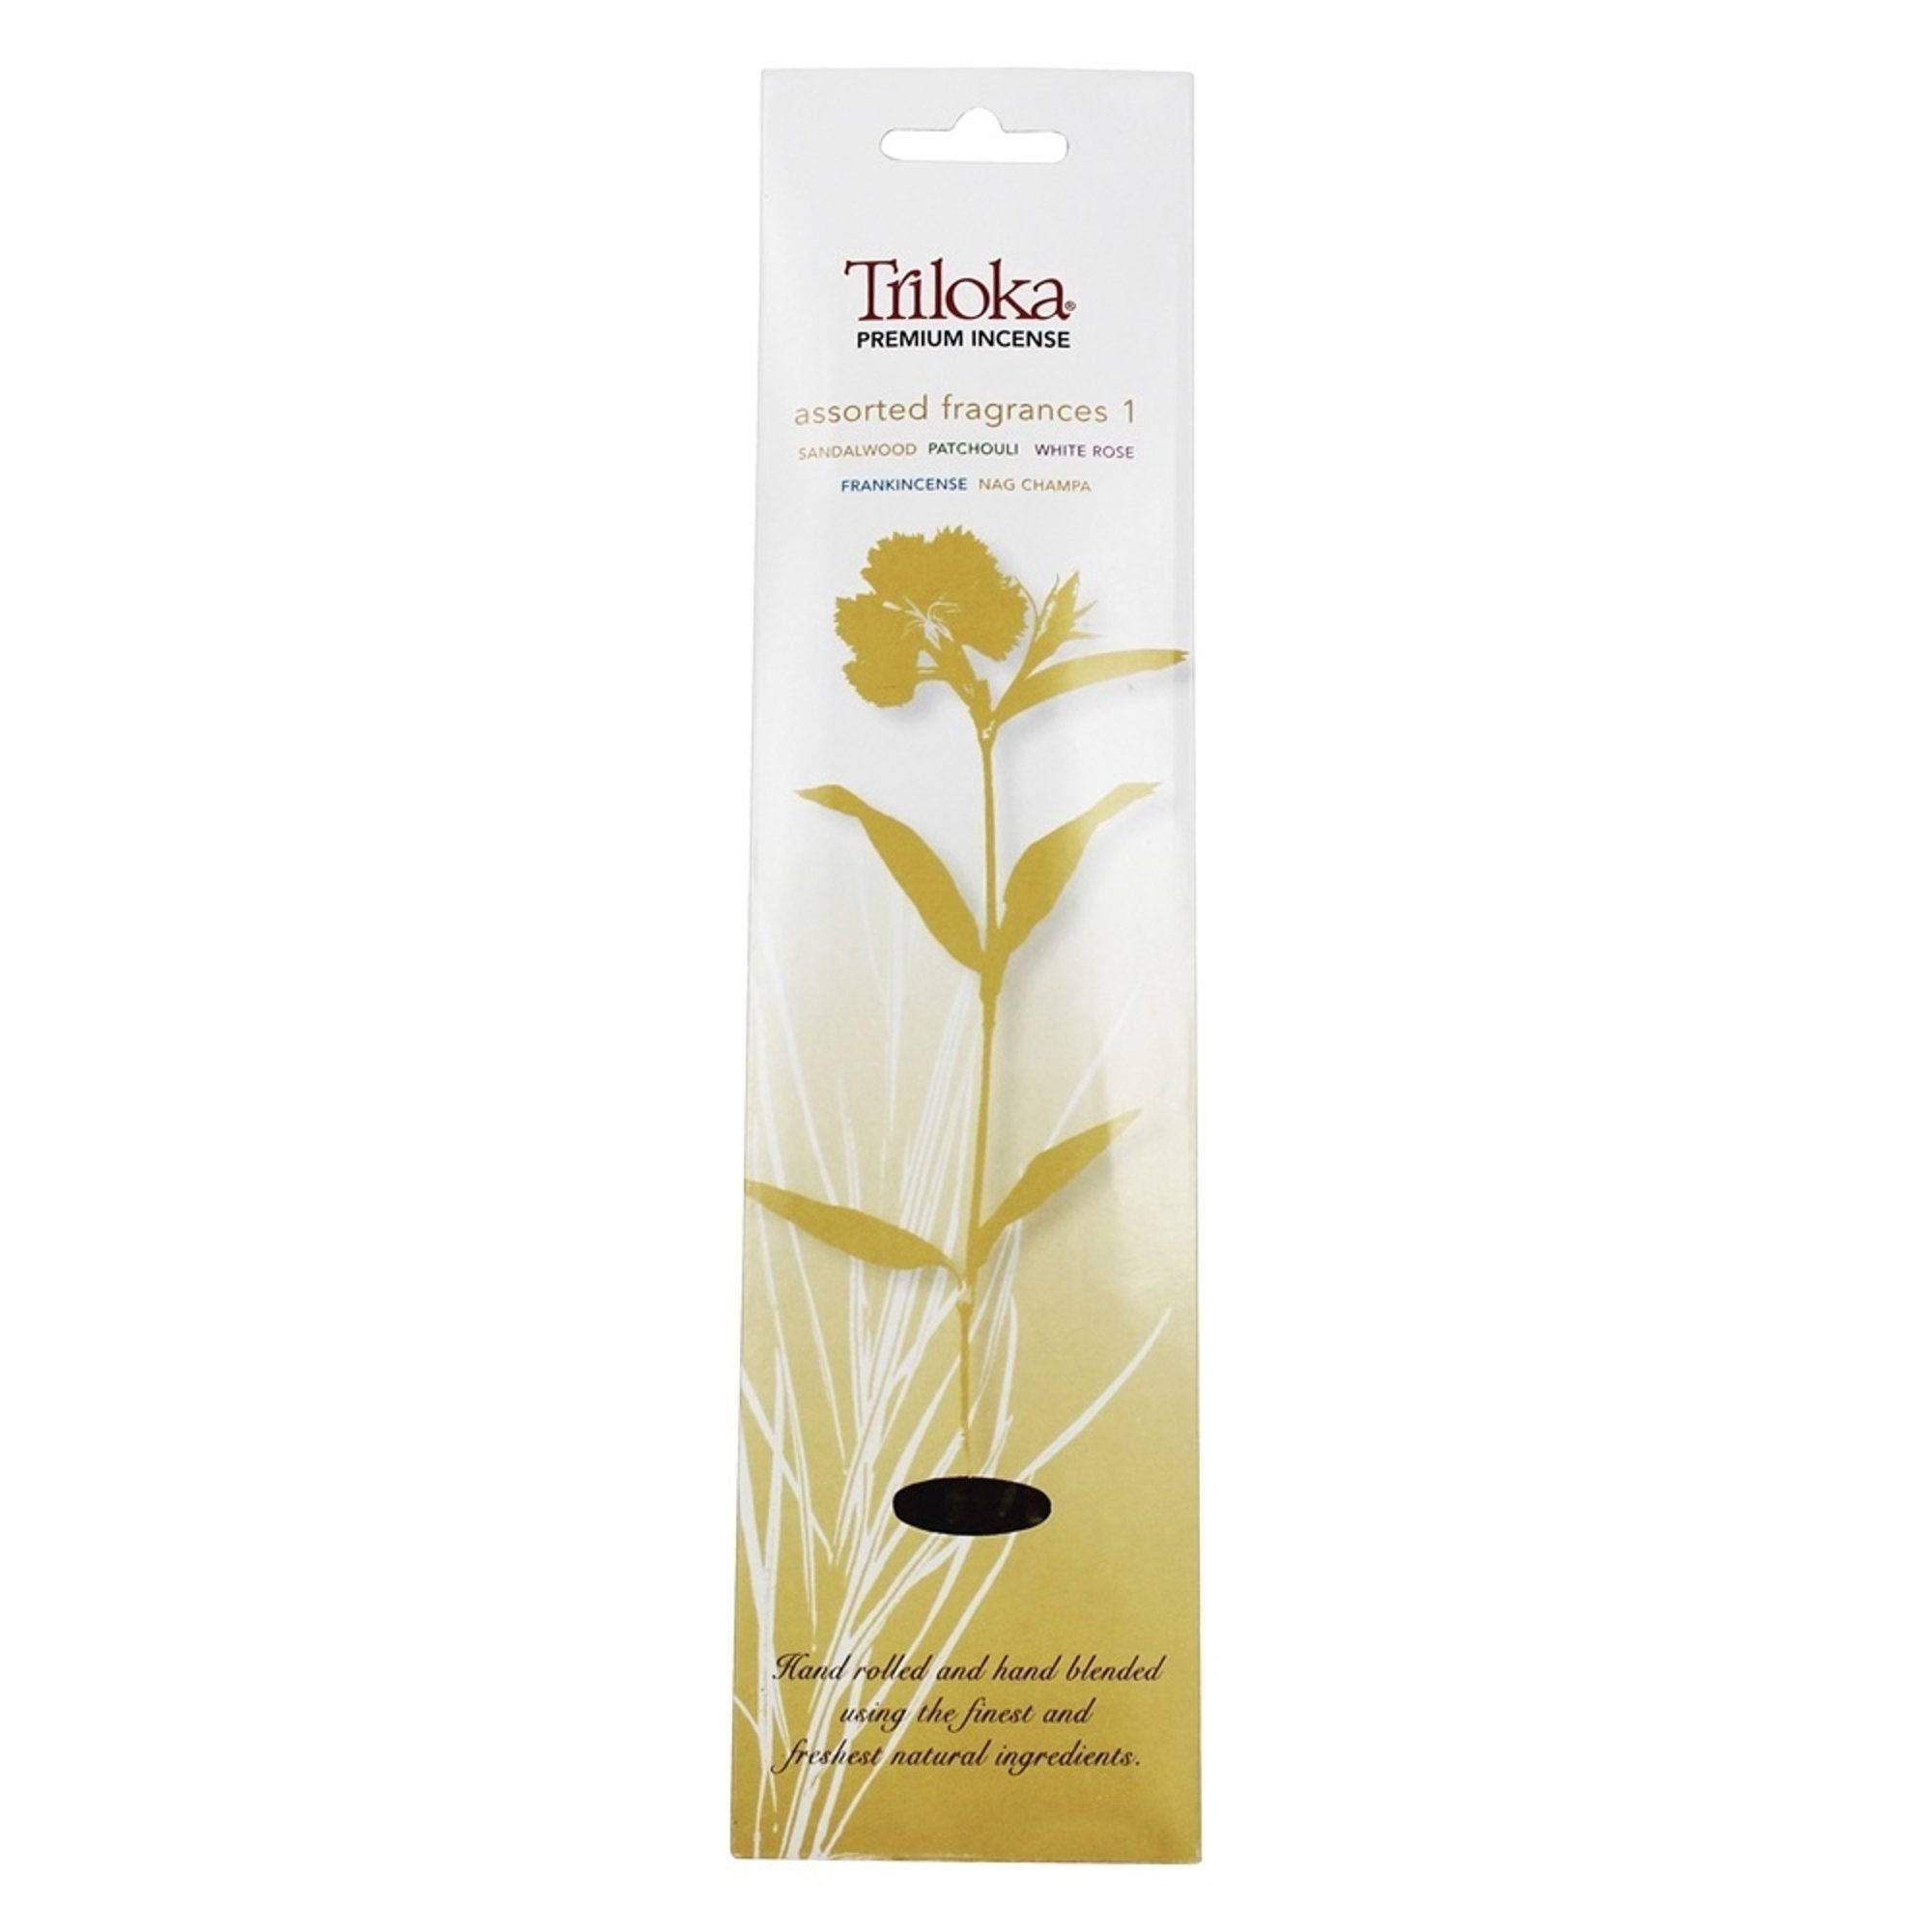 Triloka - Premium Incense Assorted Fragrances 1 - 10 Stick(s)